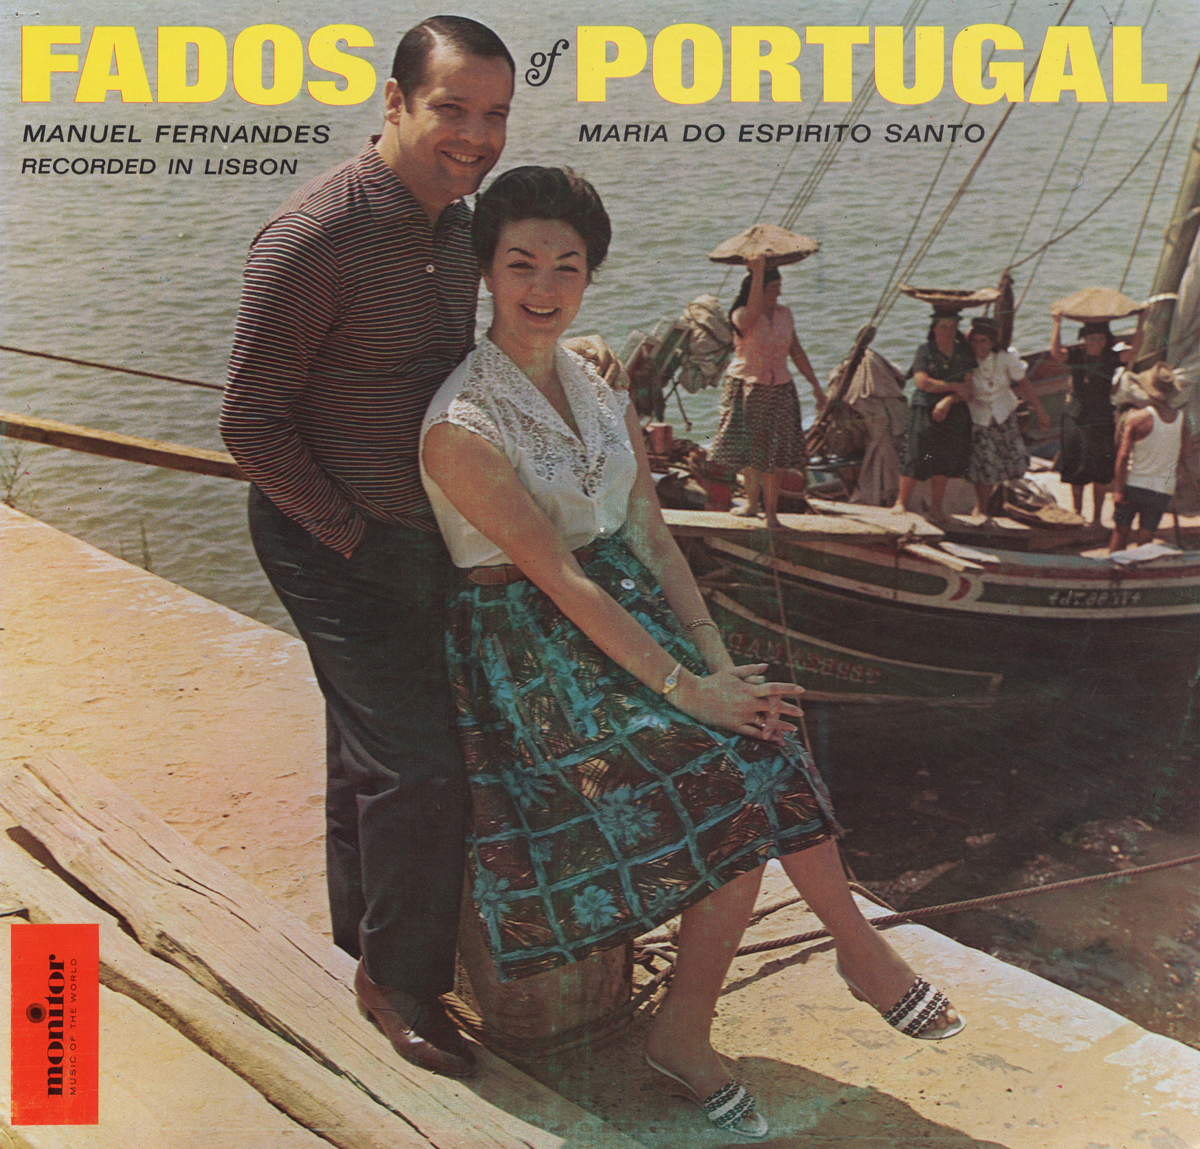 FADOS OF PORTUGAL